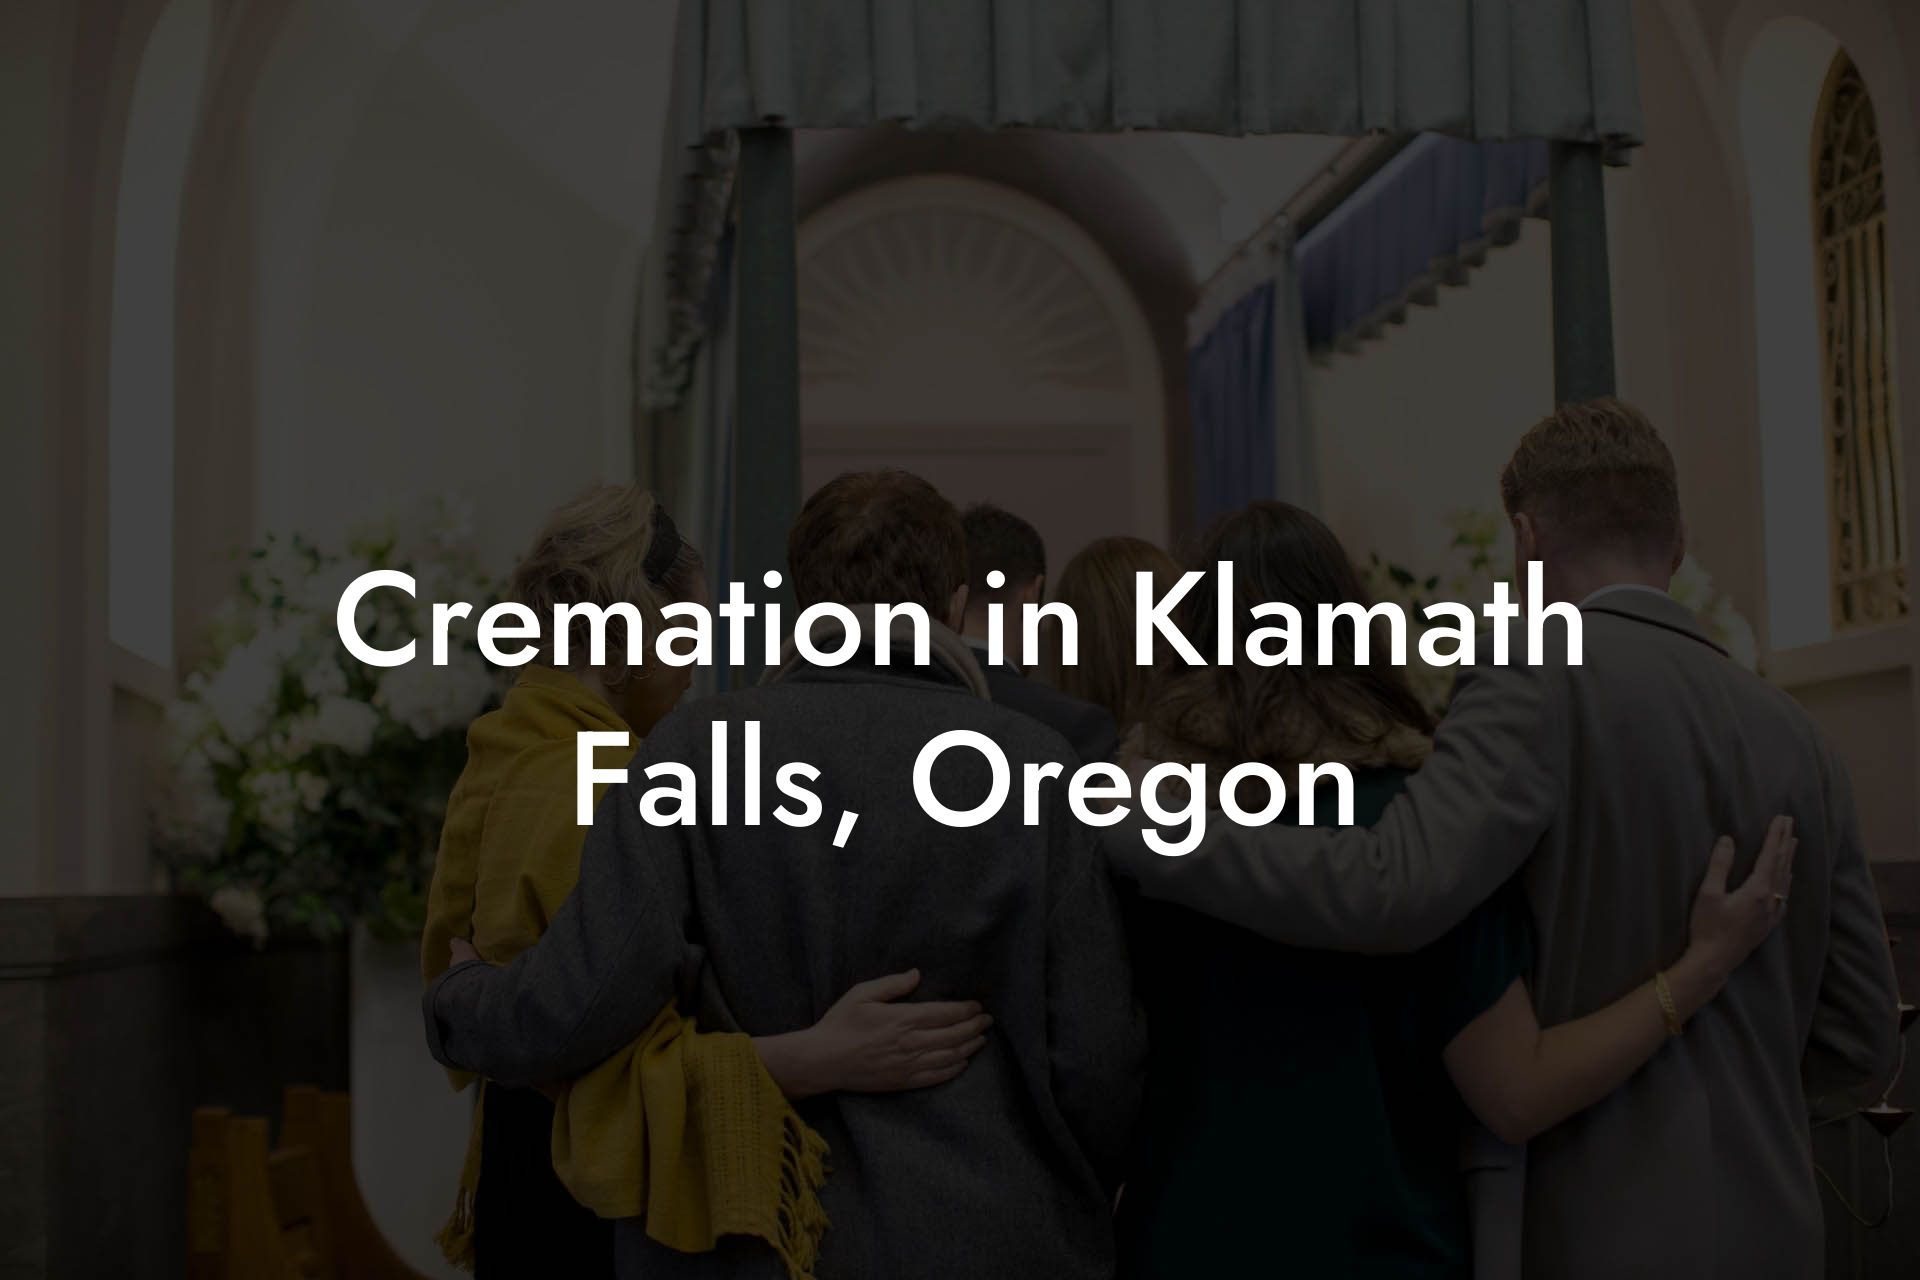 Cremation in Klamath Falls, Oregon